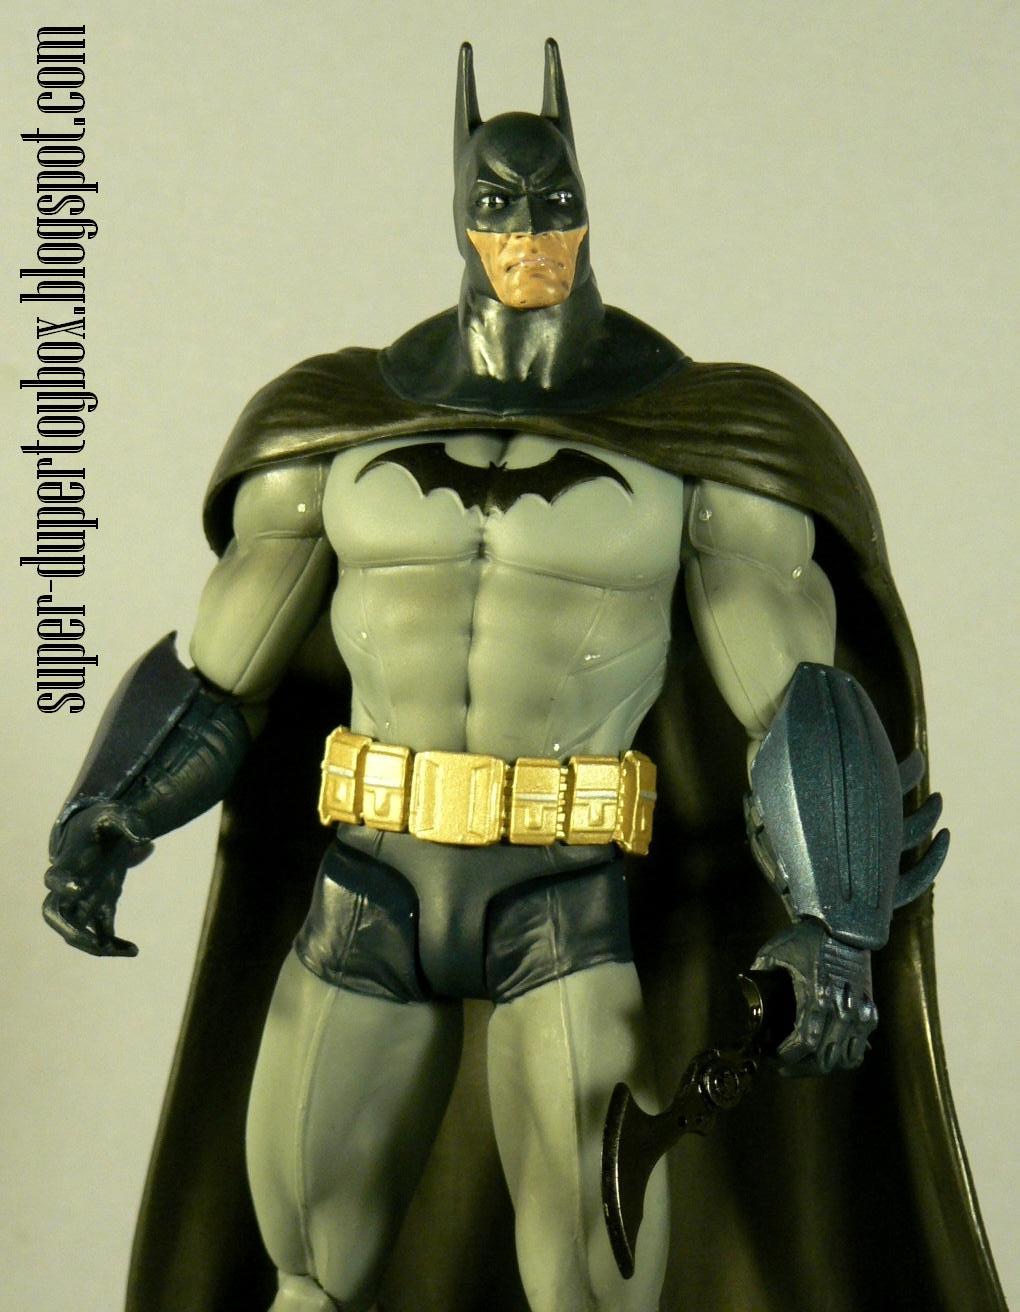 Super-DuperToyBox: Series 1 Arkham Asylum Batman by DC Direct